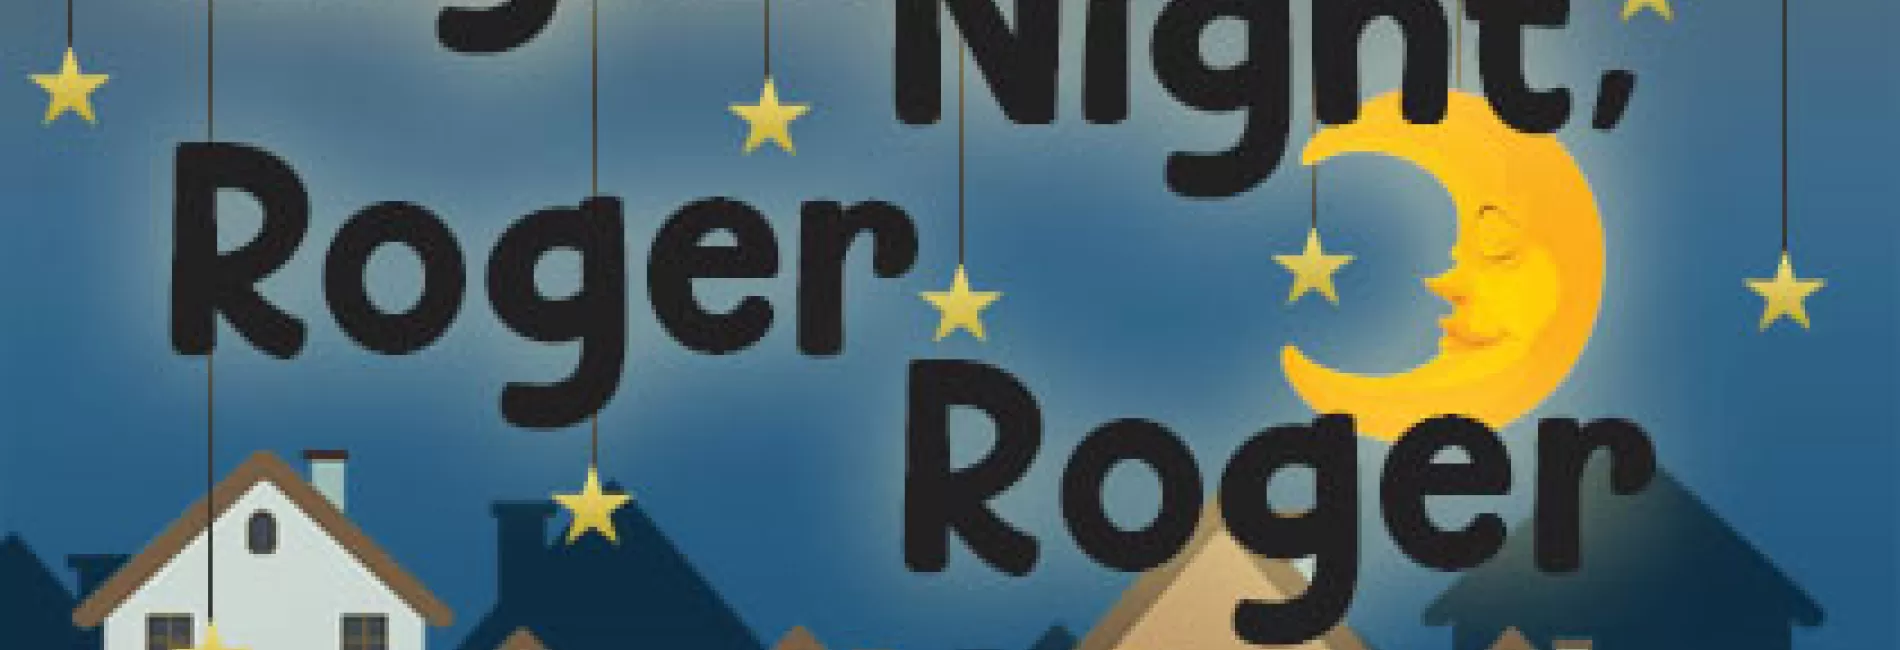 Night Night, Roger Roger: YouTube Live Stream Nov 20-22, Fri & Sat at 7:30pm & Sat & Sun at 2pm